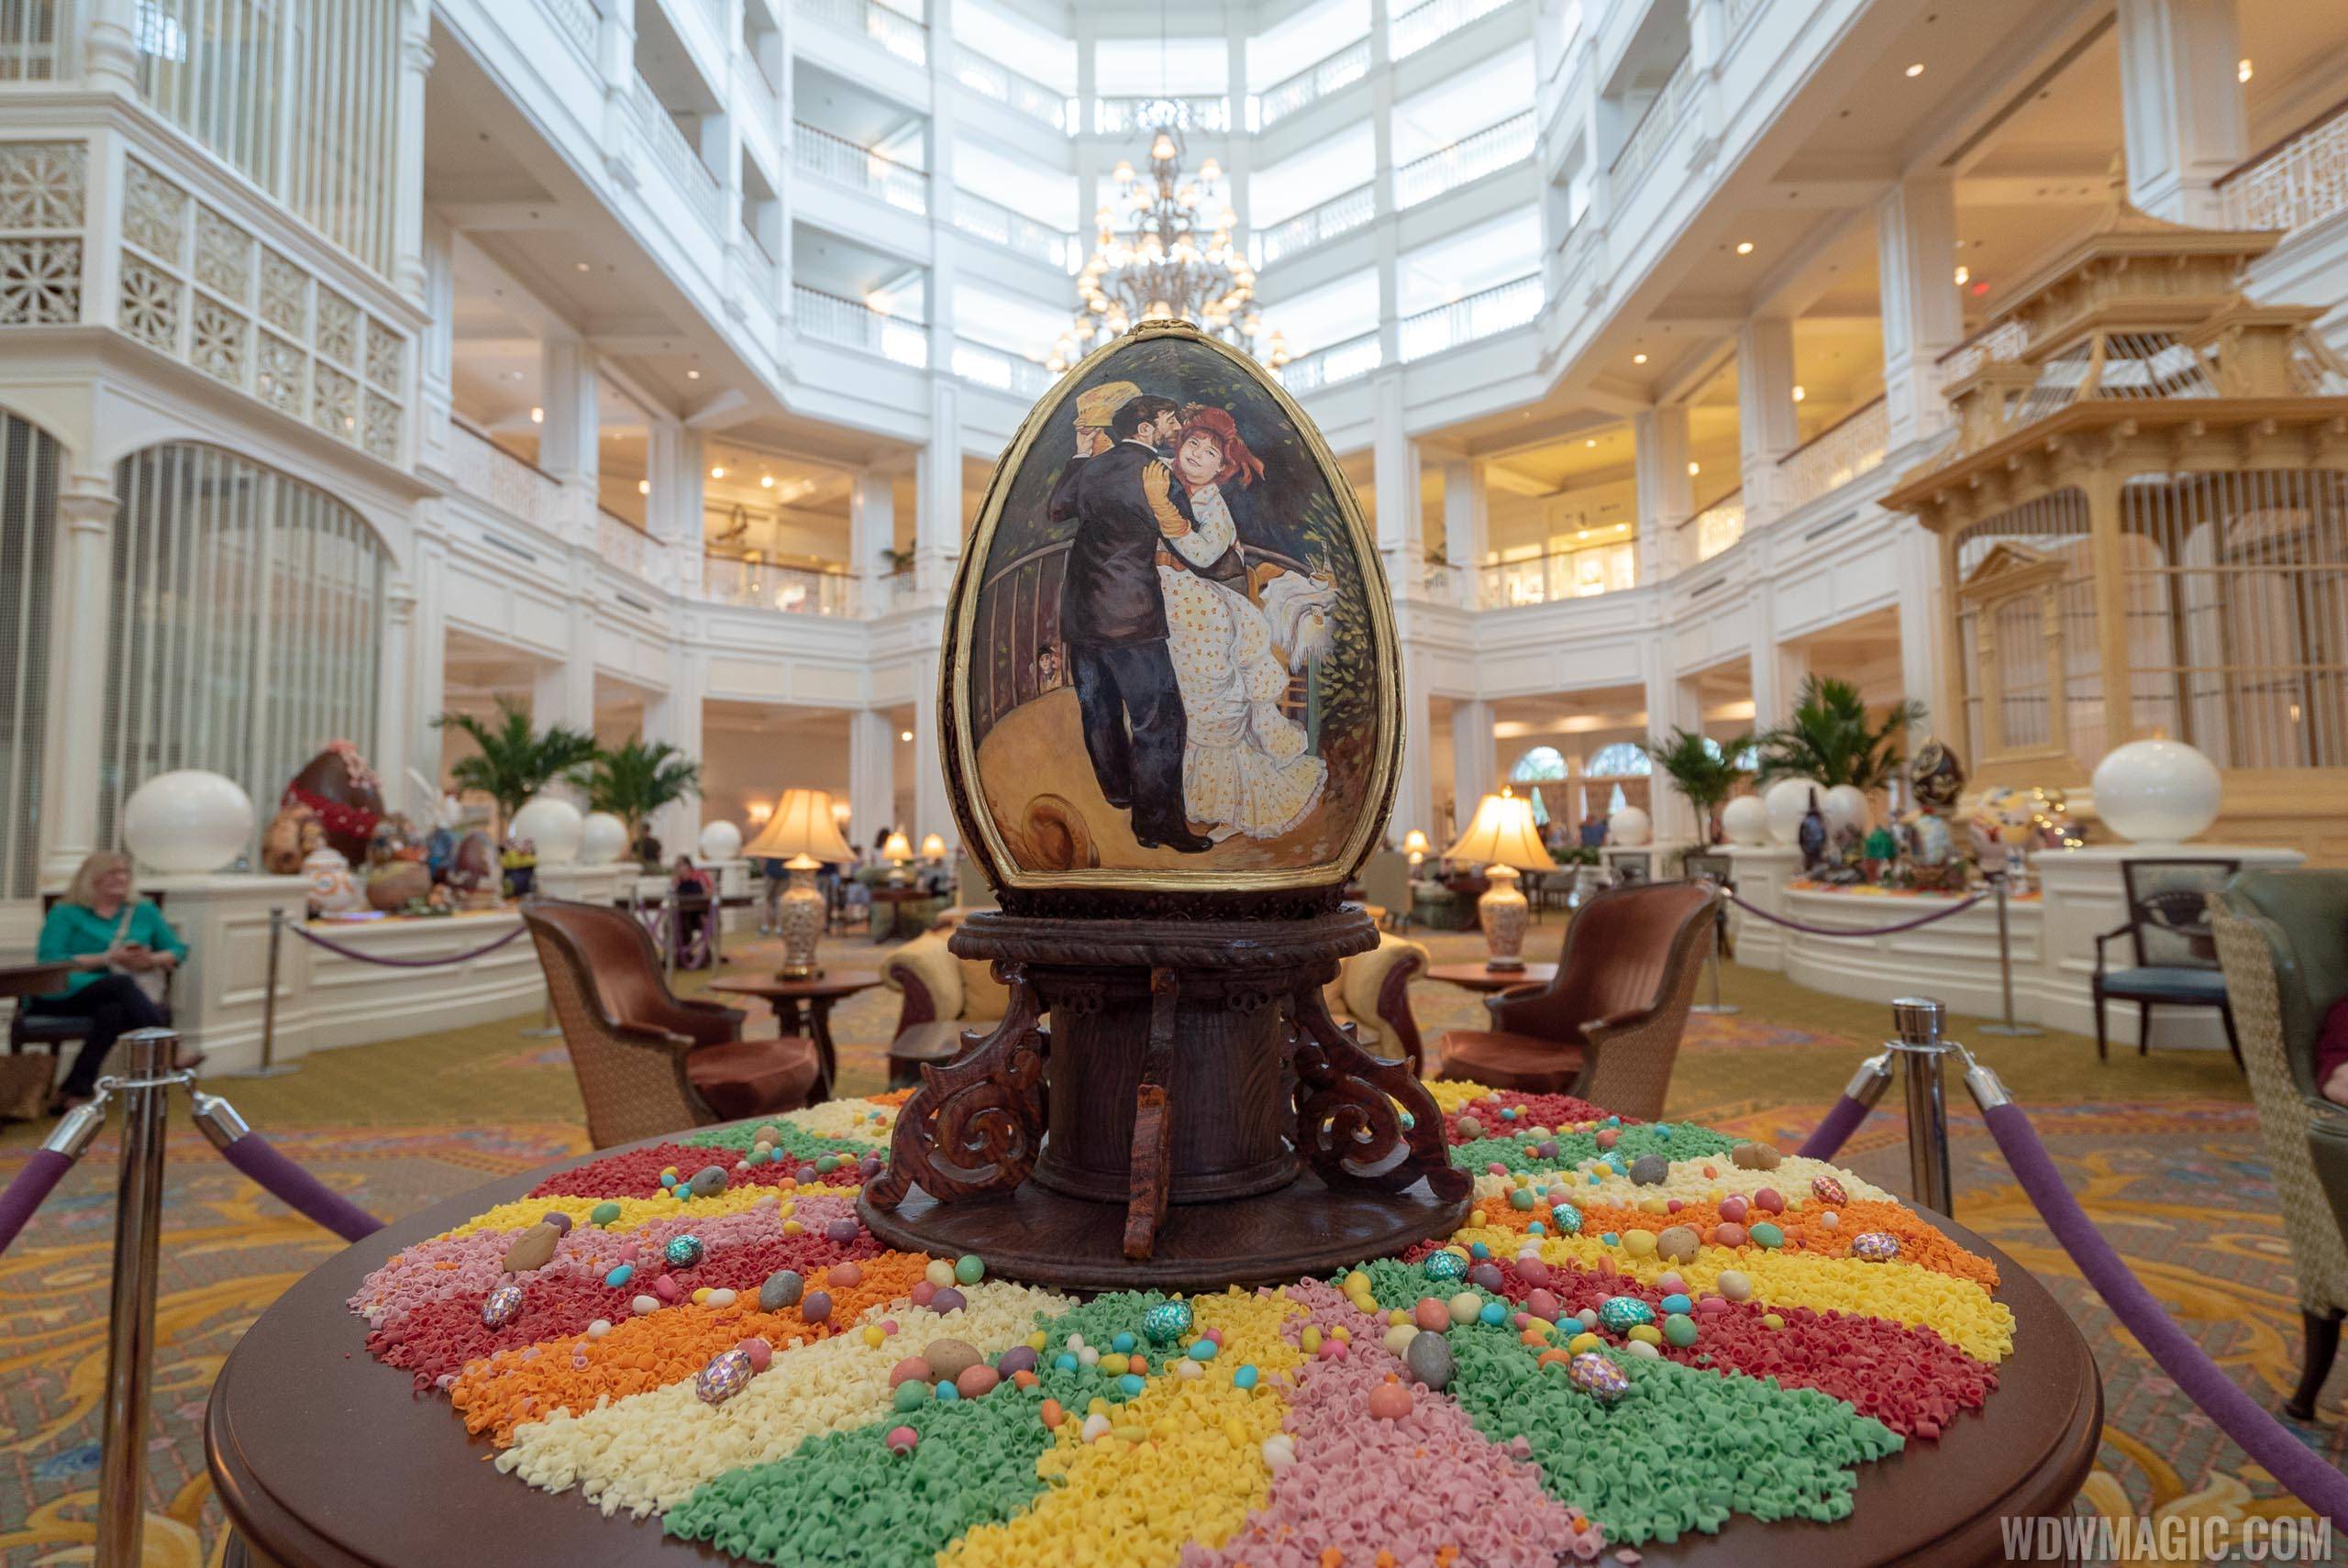 PHOTOS - 2019 Easter Egg display at Disney's Grand Floridian Resort